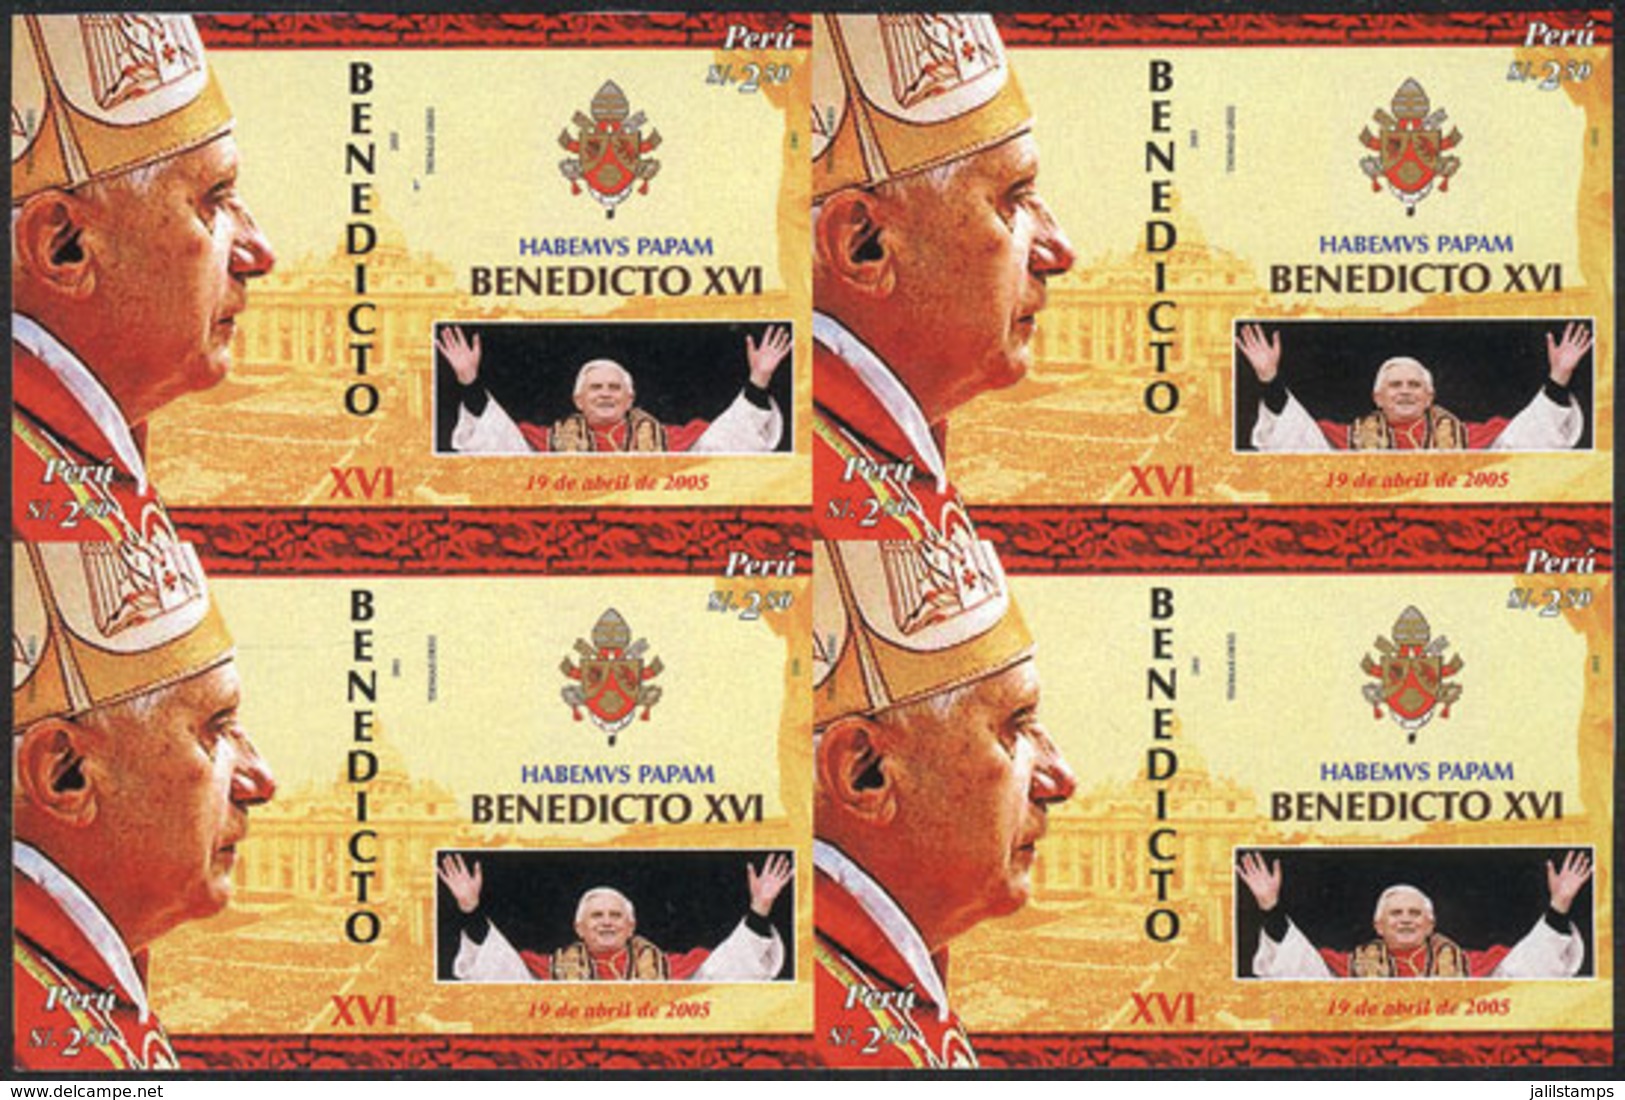 PERU: Sc.1489, 2006 Pope Benedict XVI, IMPERFORATE BLOCK OF 4 Consisting Of 4 Sets, Excellent Quality, Rare! - Pérou